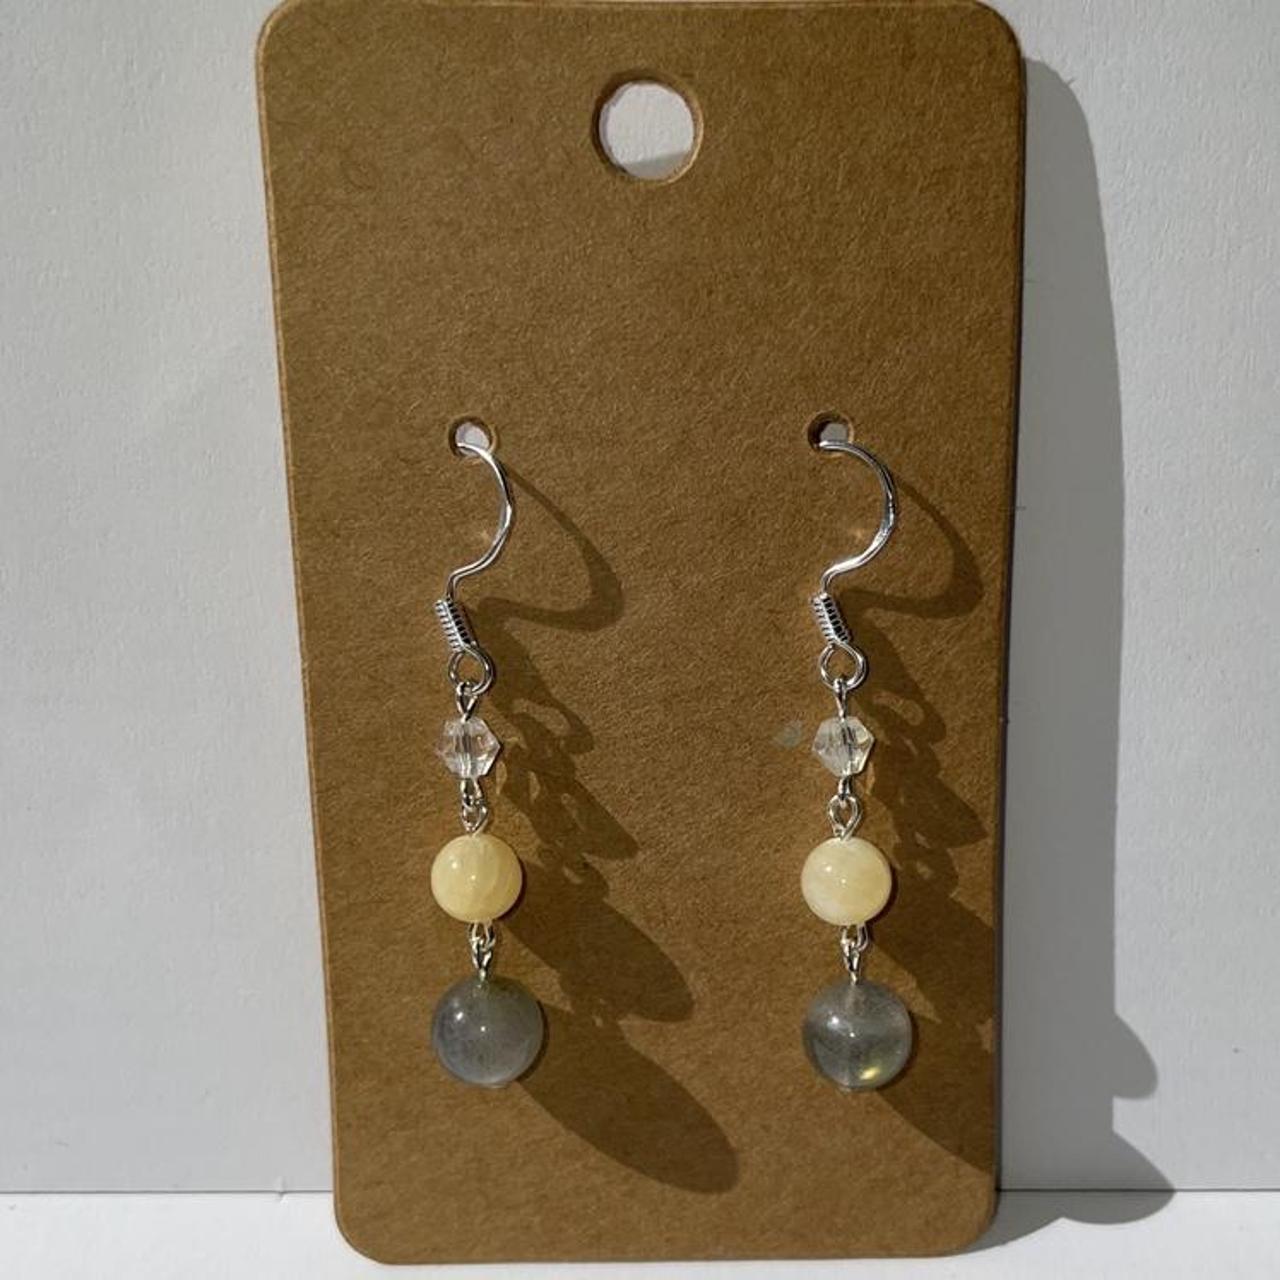 Product Image 4 - Handmade silver wire earrings!

🌟 Handmade